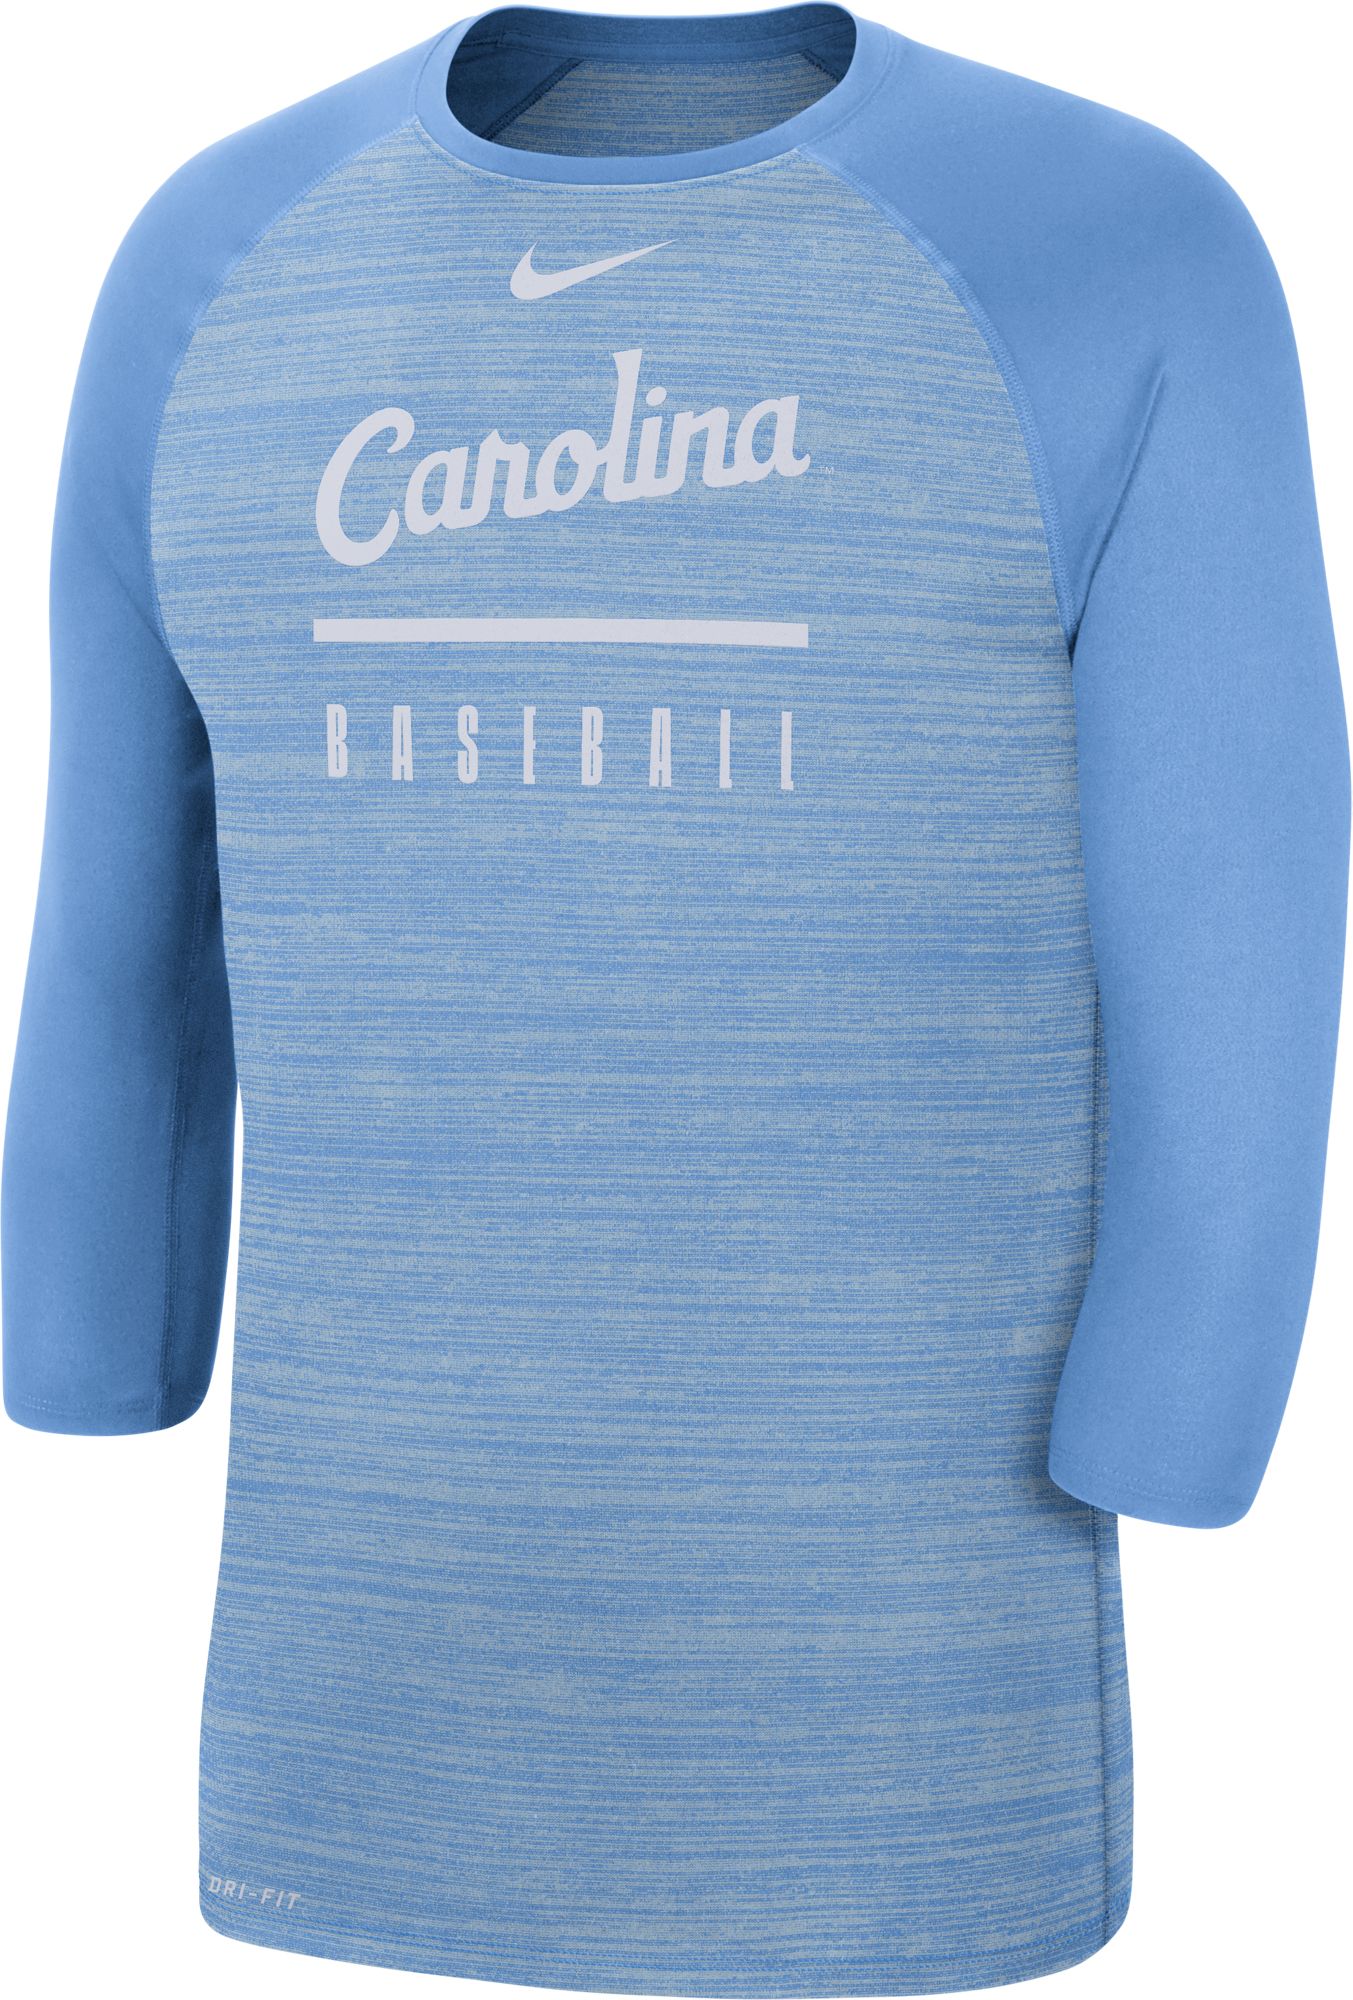 carolina blue dri fit shirt